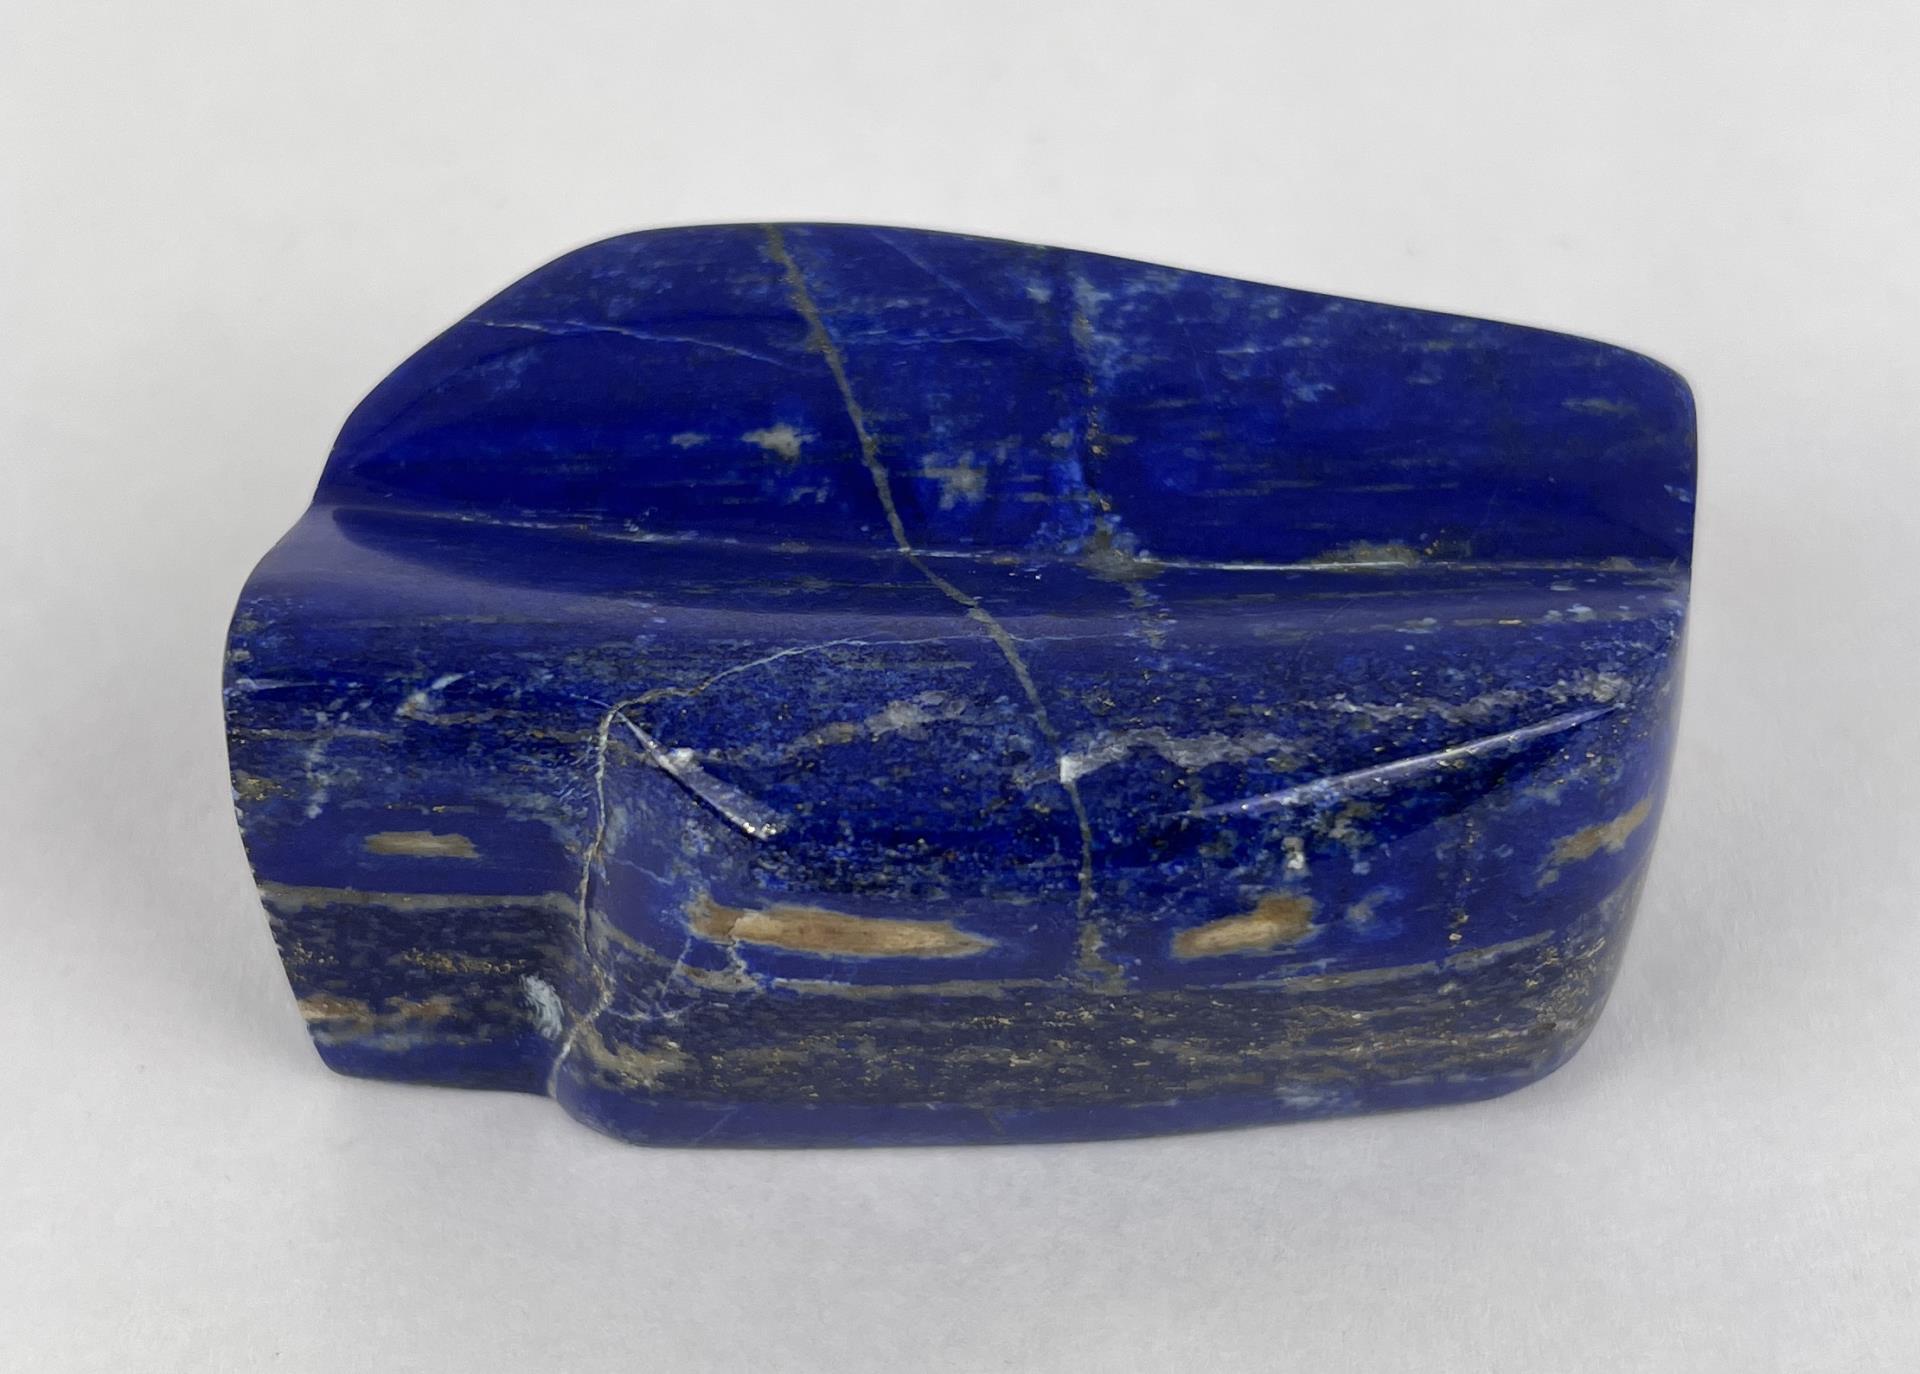 1956 Carats of Lapis Lazuli Stone Carving Media